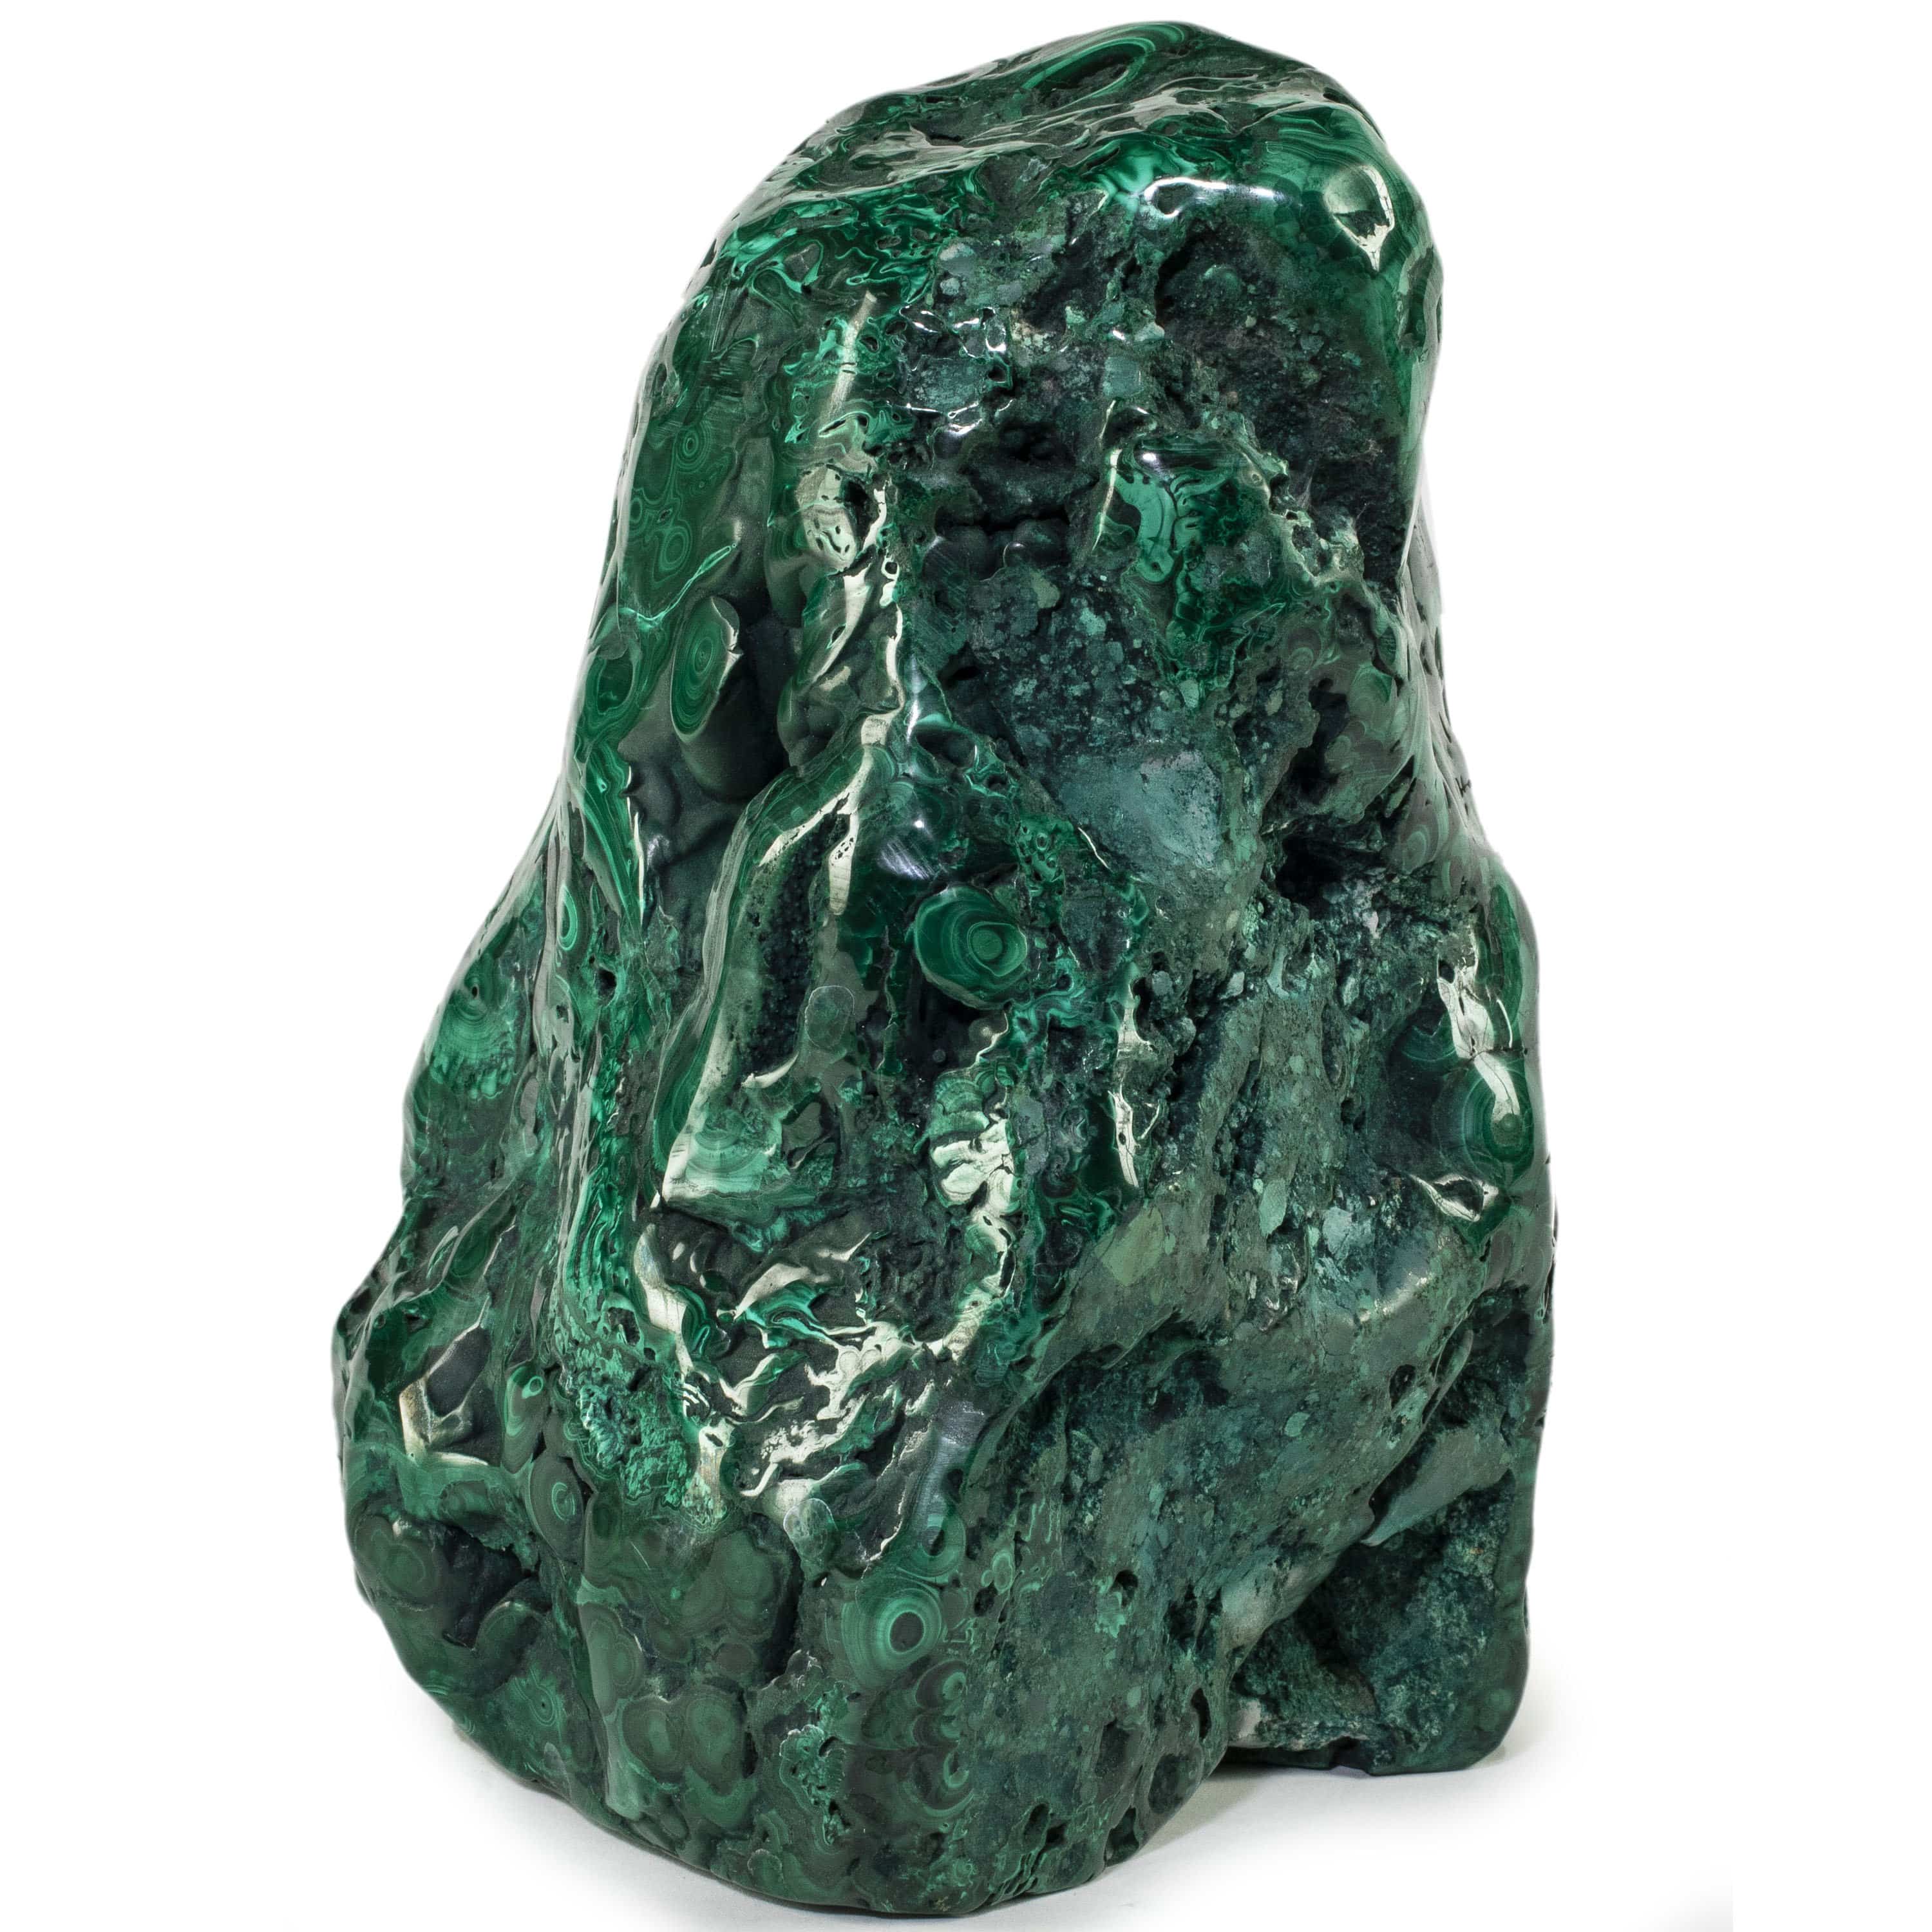 Kalifano Malachite Rare Natural Green Malachite Polished Freeform Specimen from Congo - 8.2 kg / 18 lbs MA5400.001